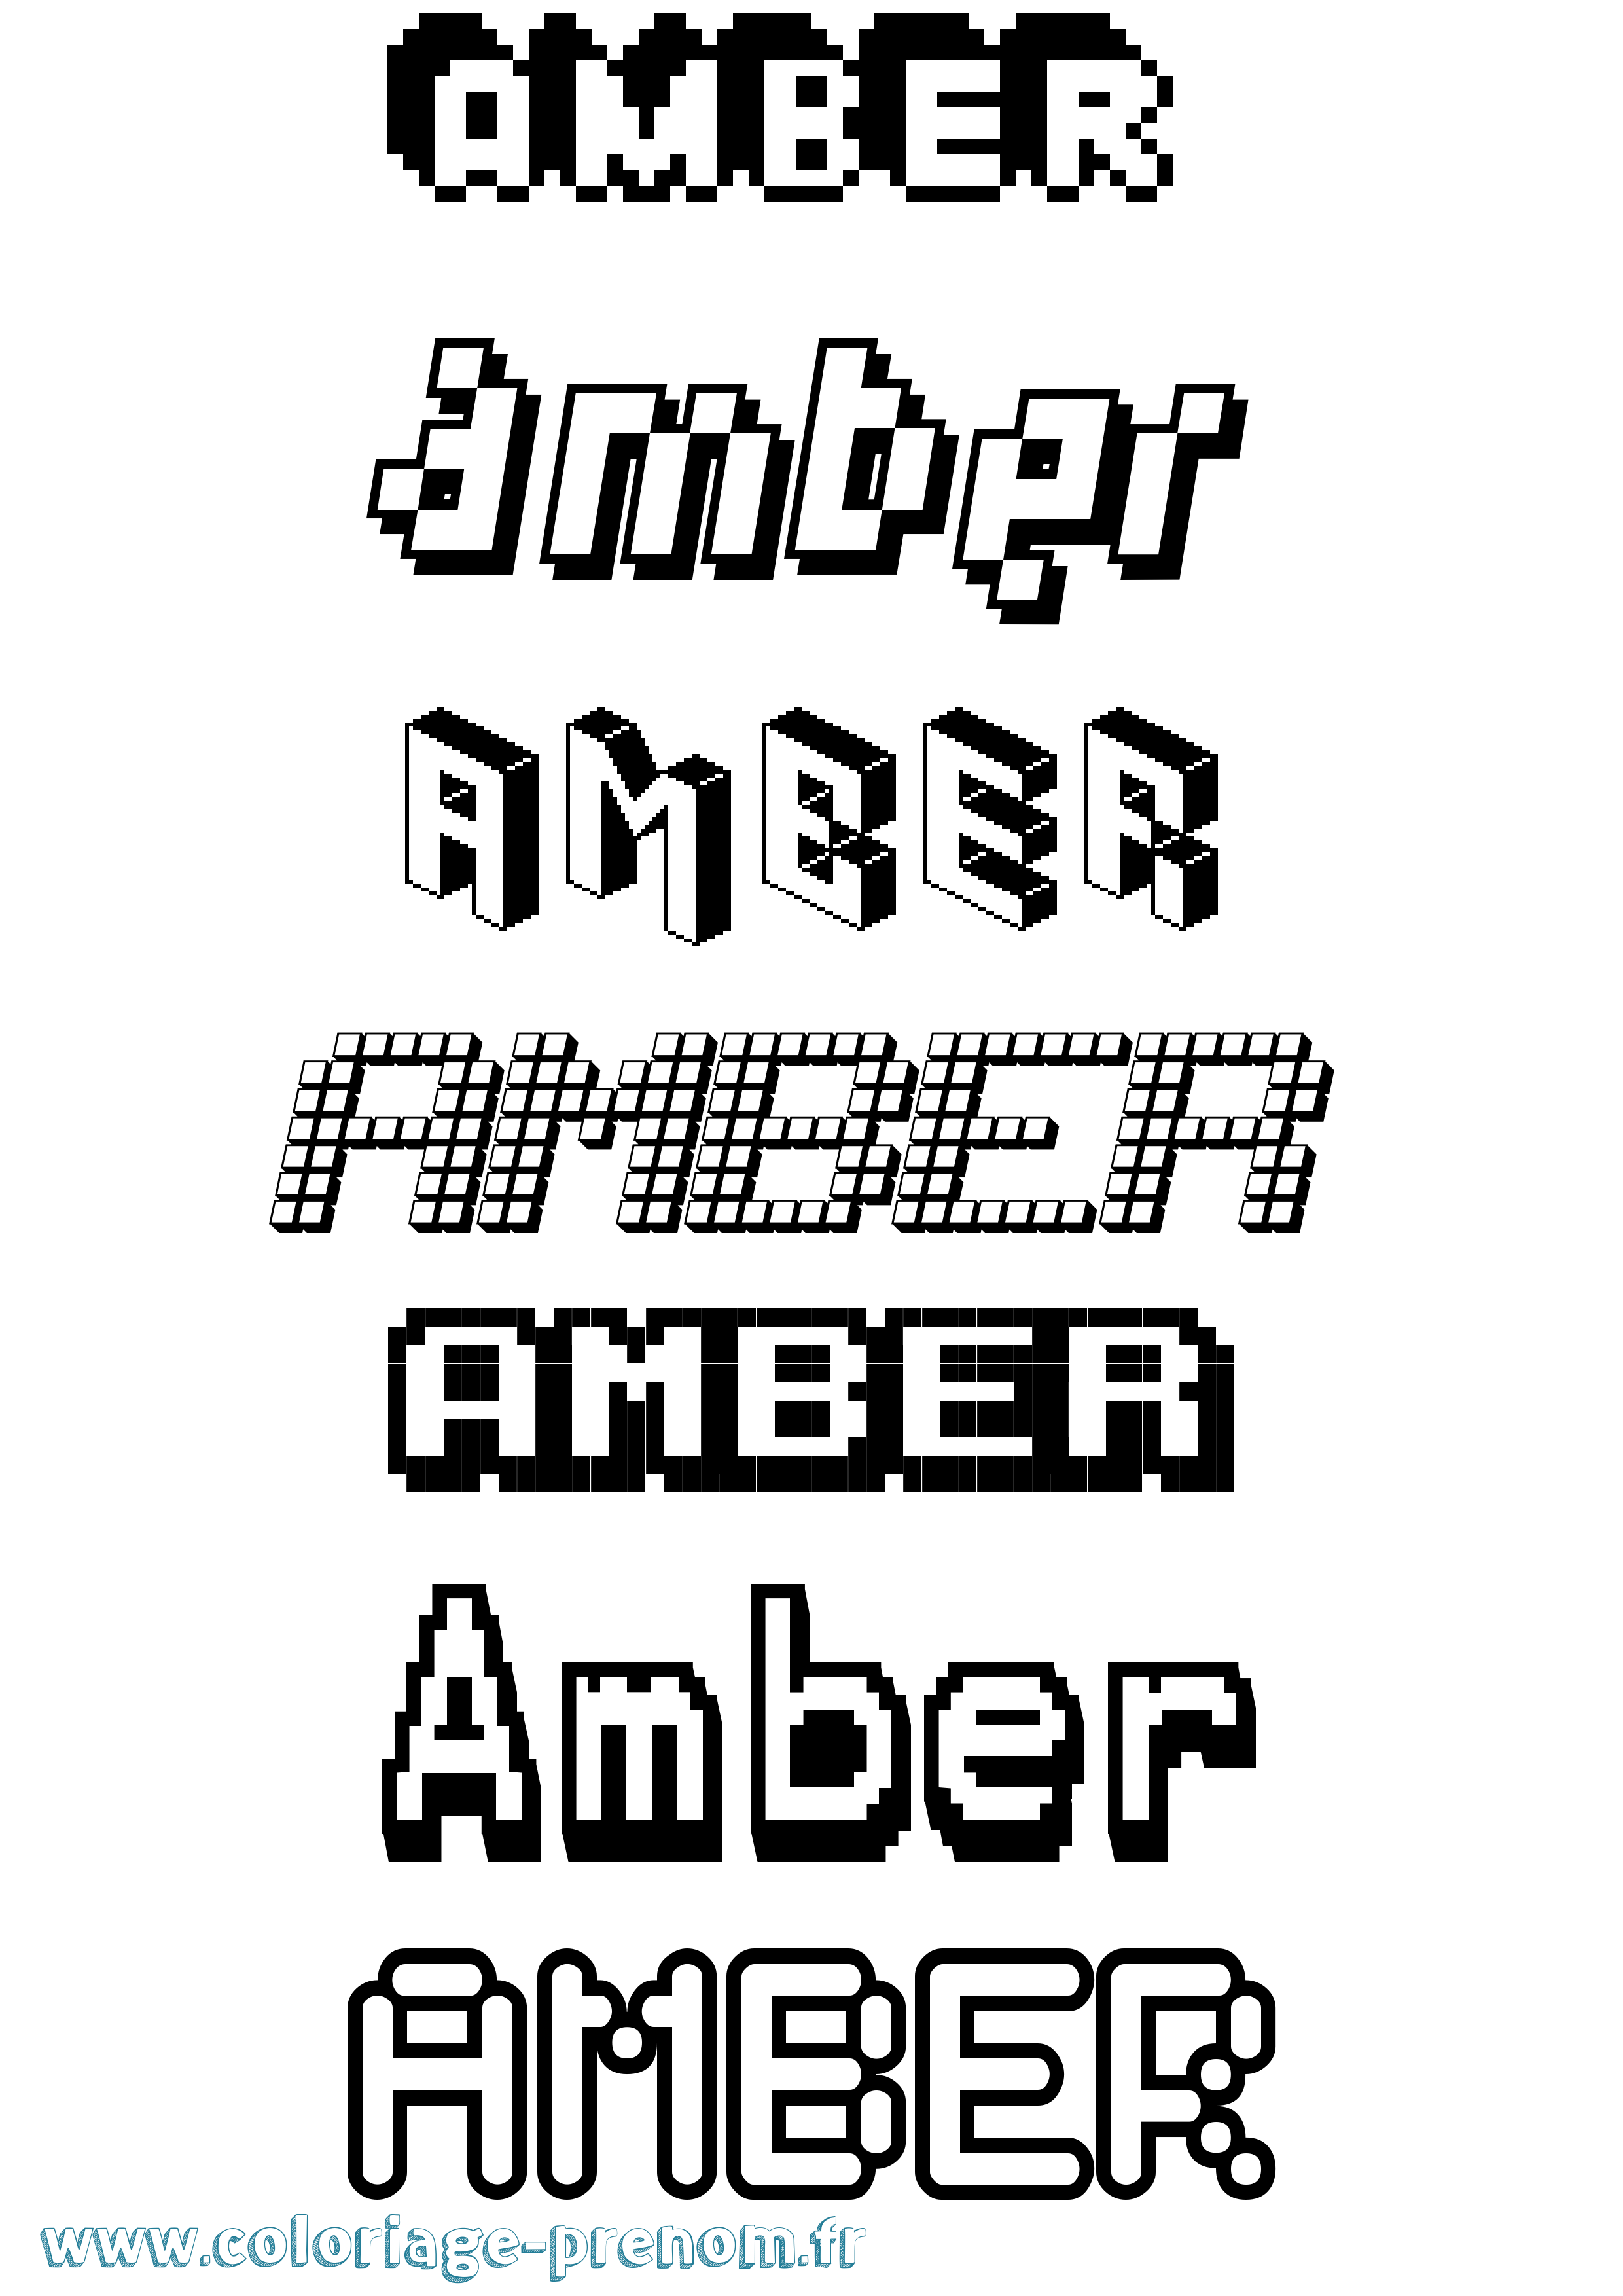 Coloriage prénom Amber Pixel